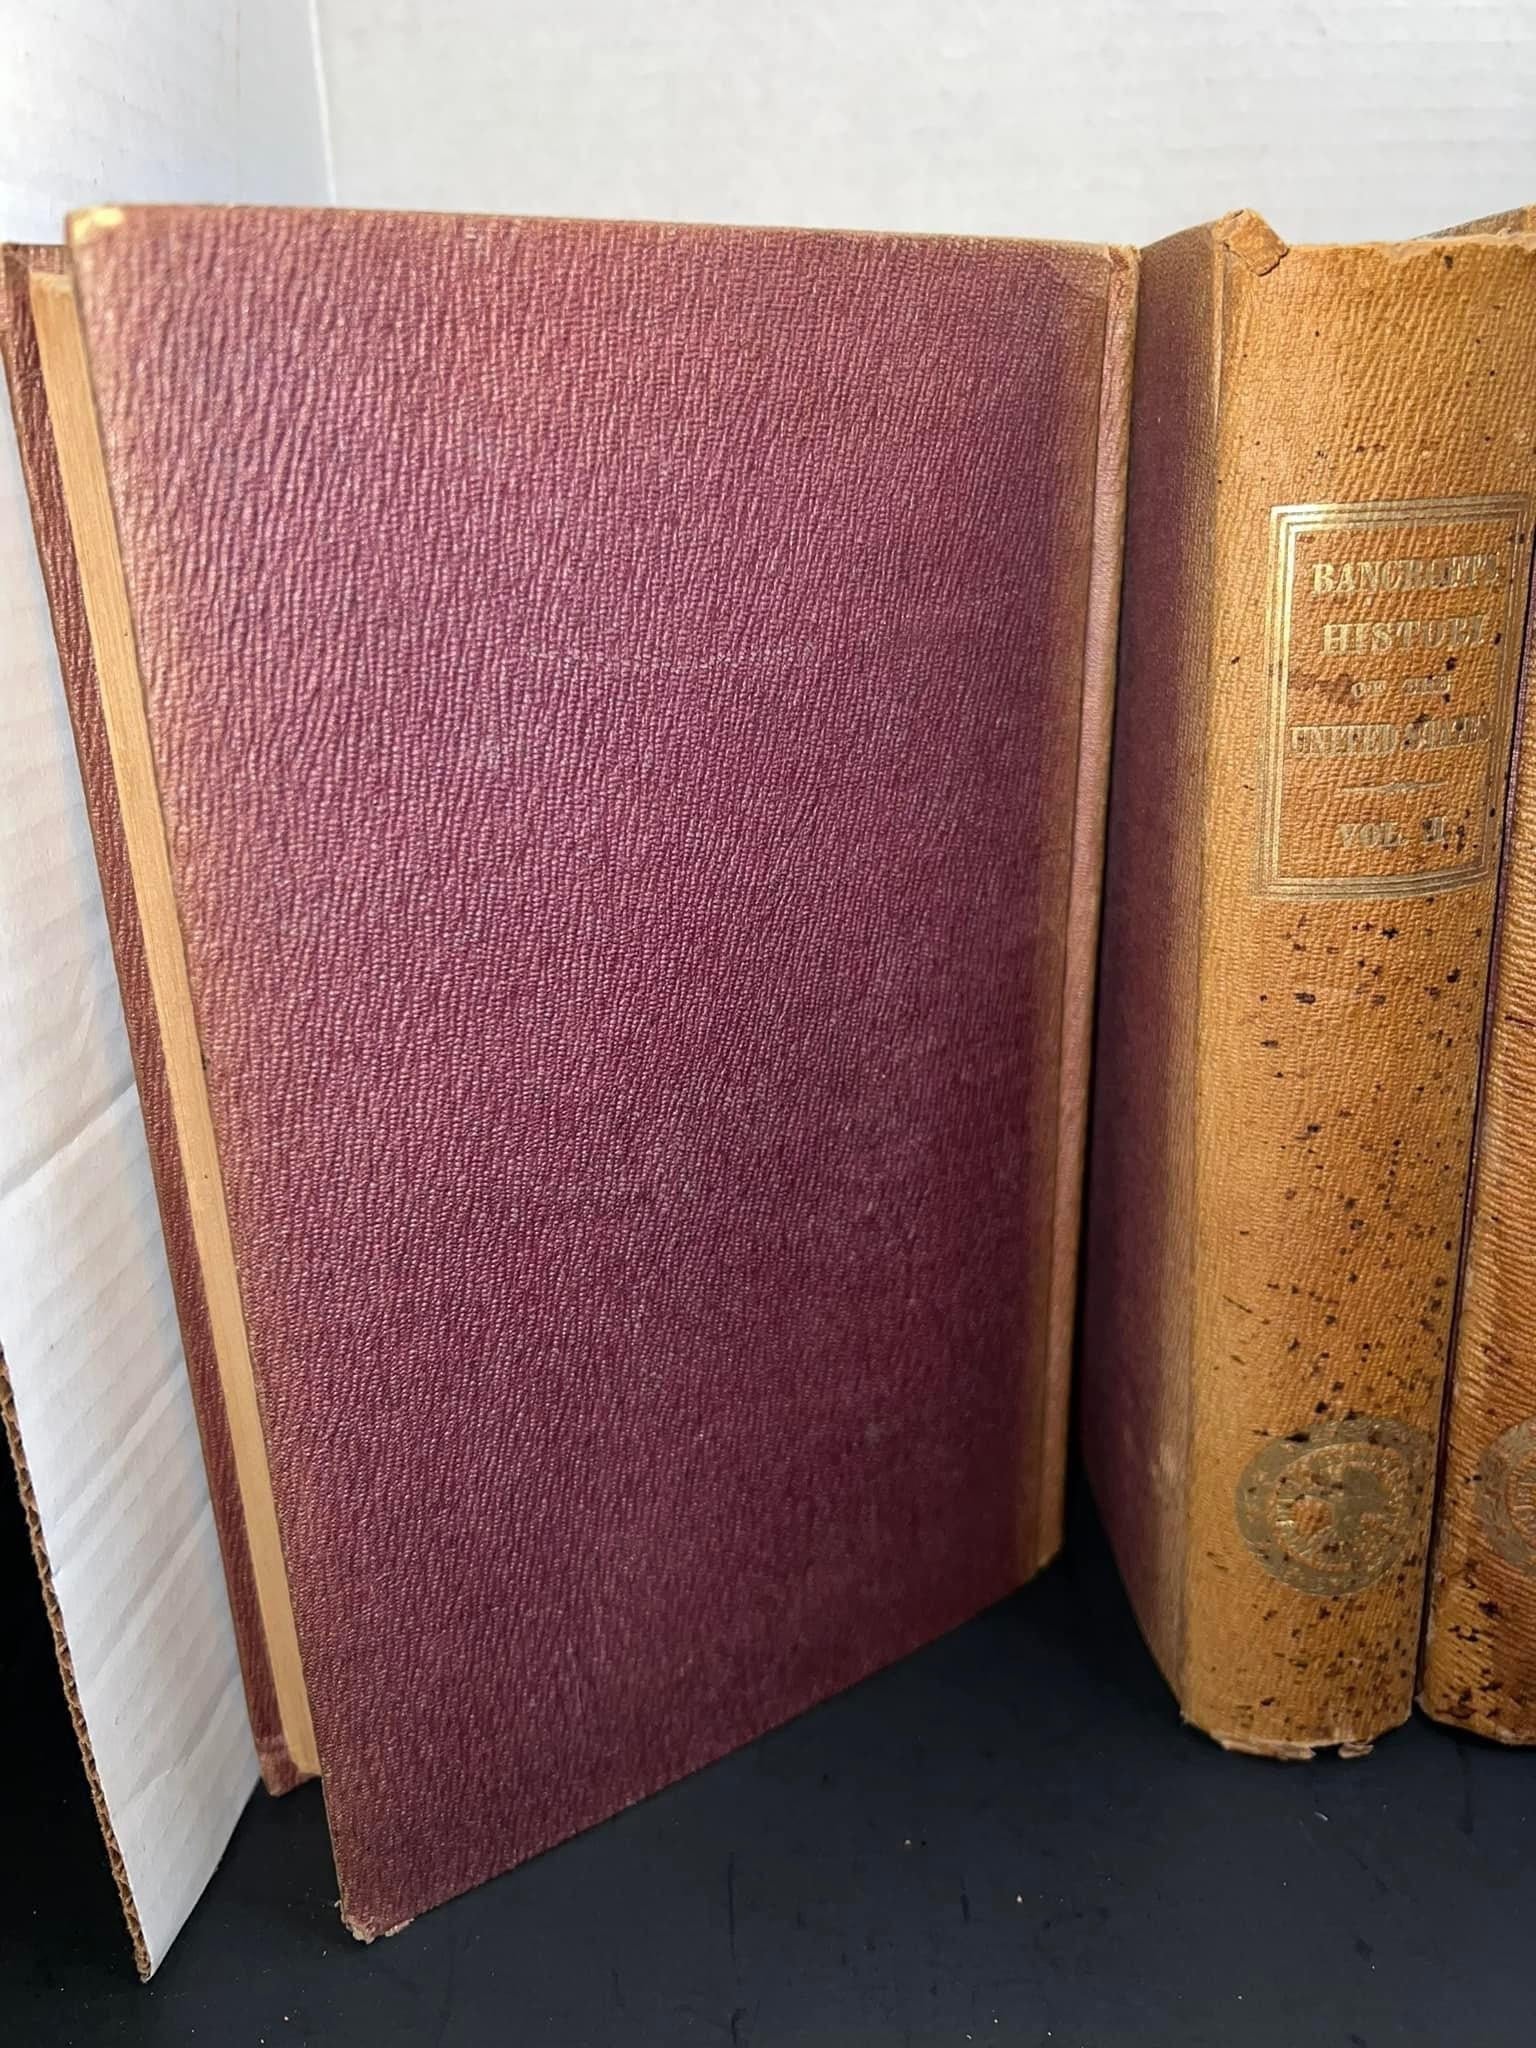 Antique pre civil war 1855 bancroft’s history History of the United States 7 volume set